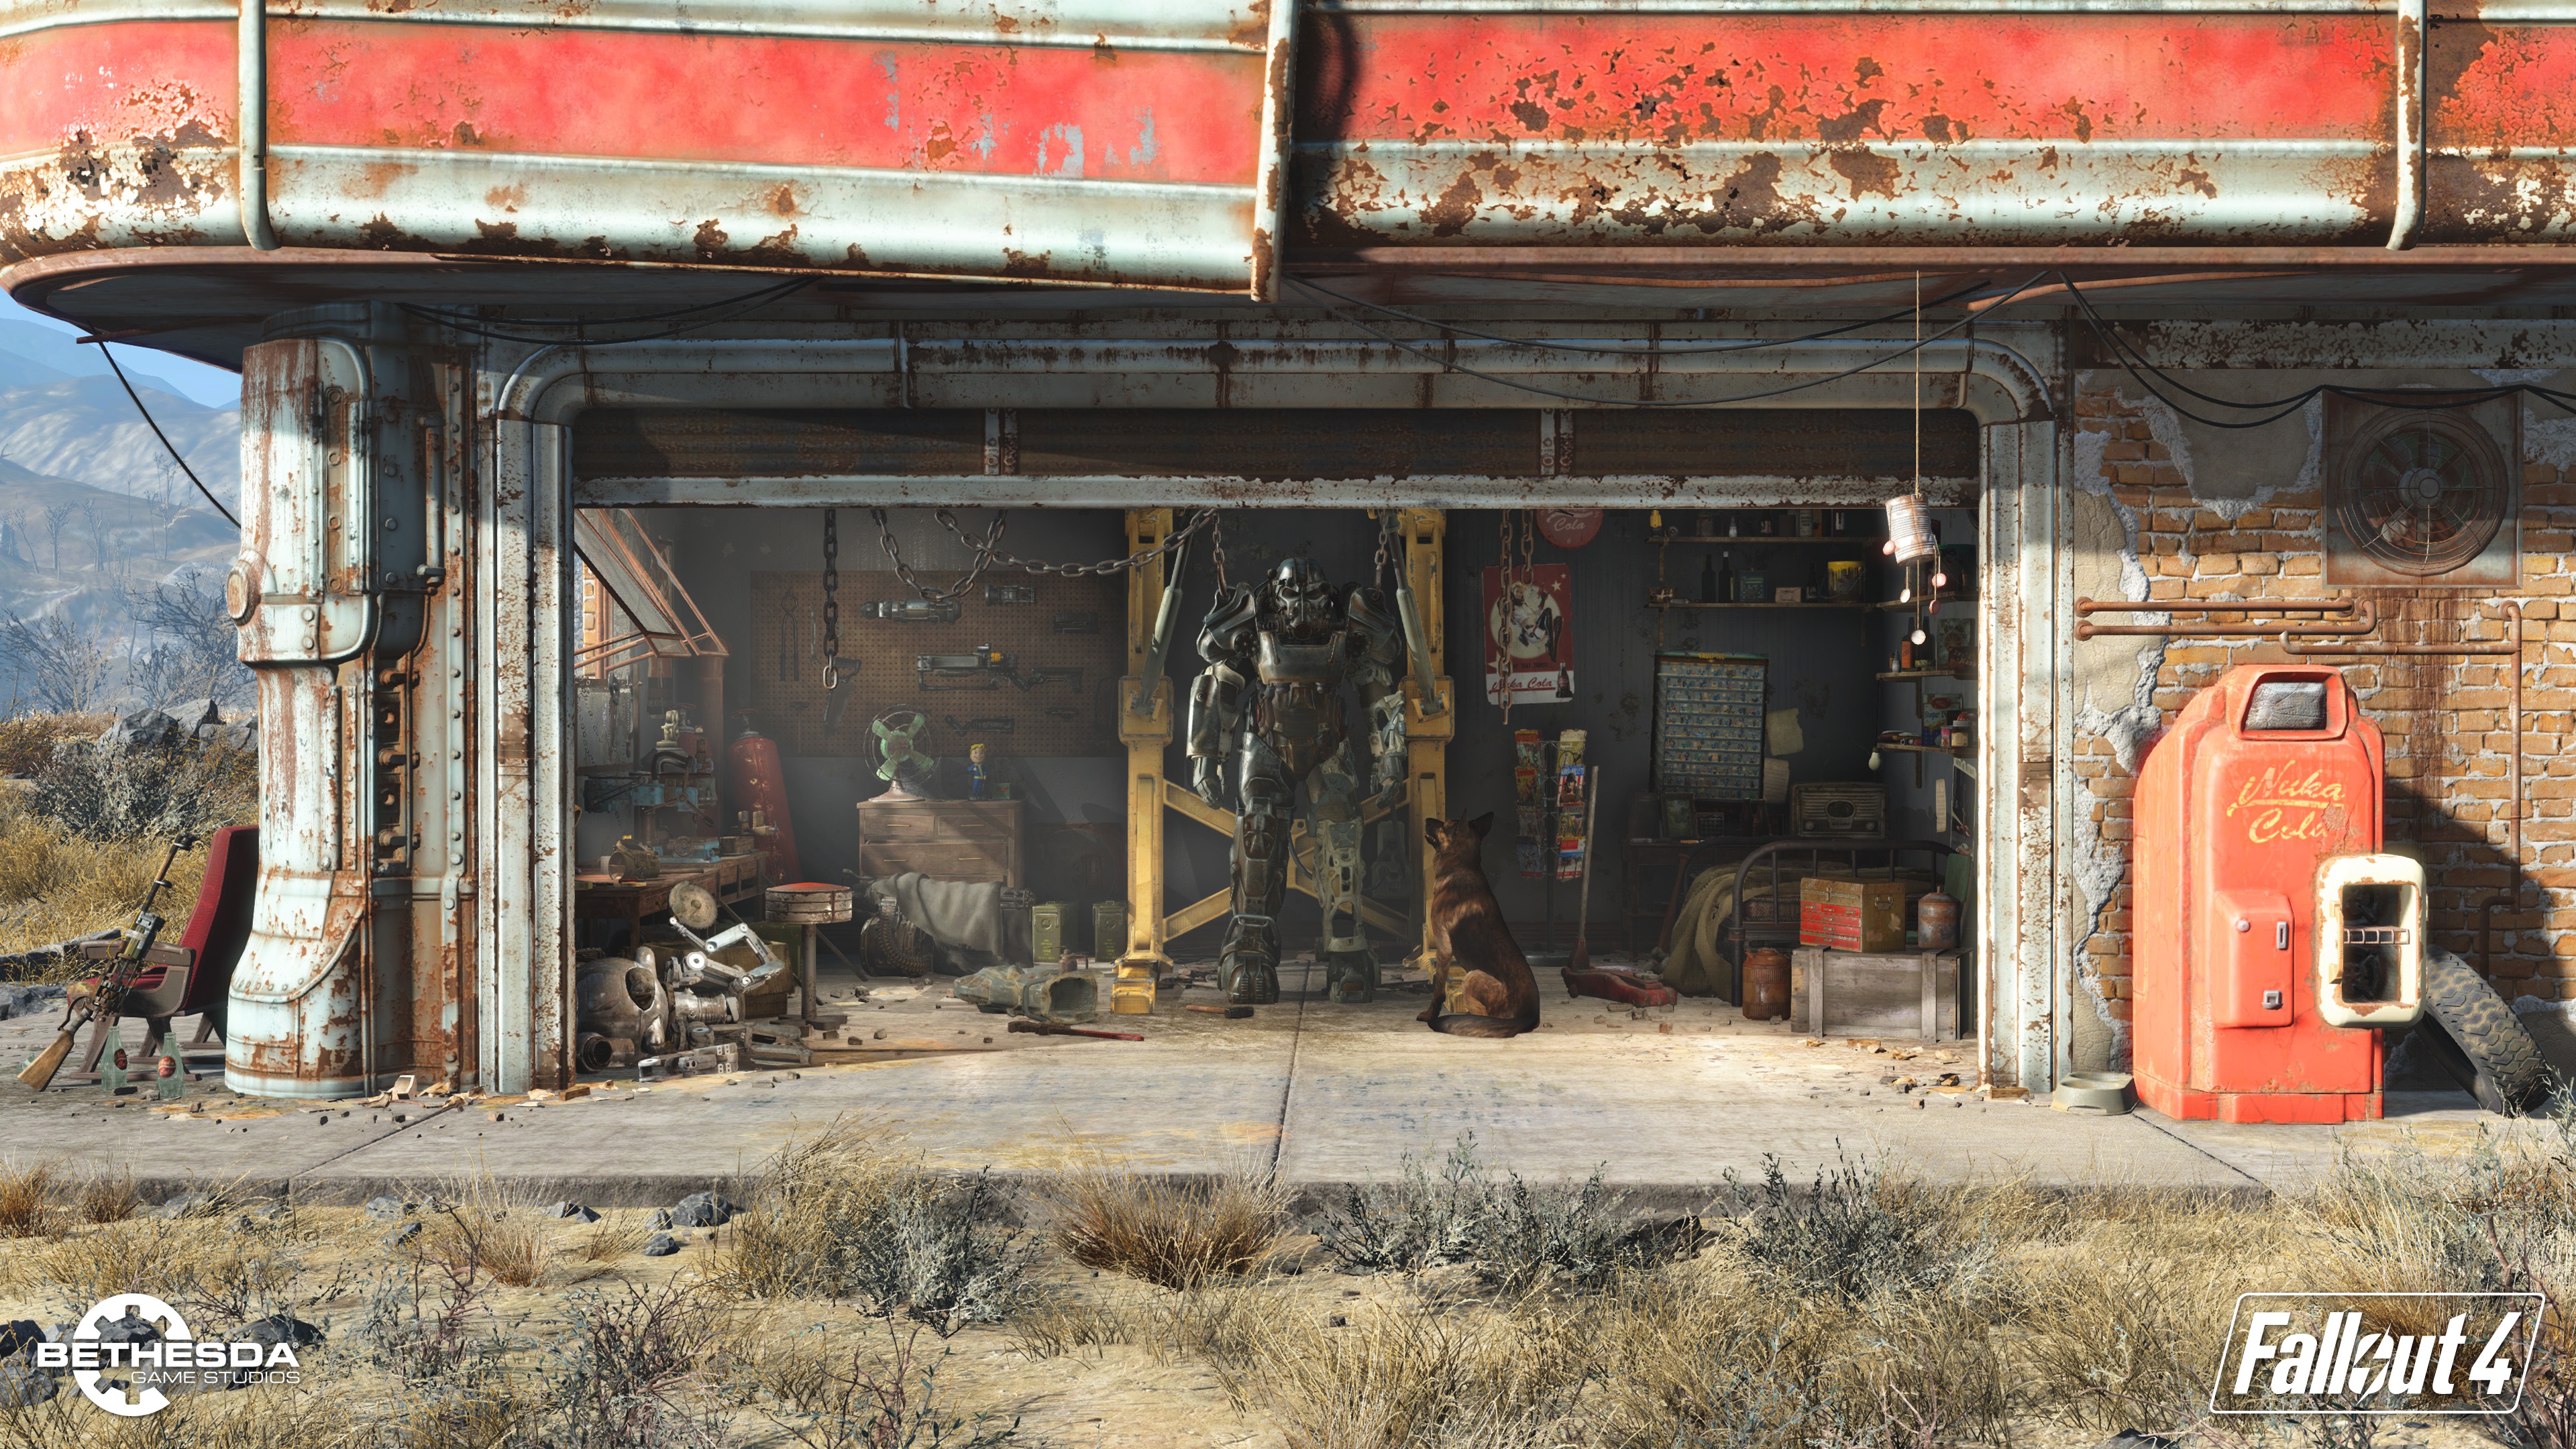 S Fallout Wallpaper Kategorie